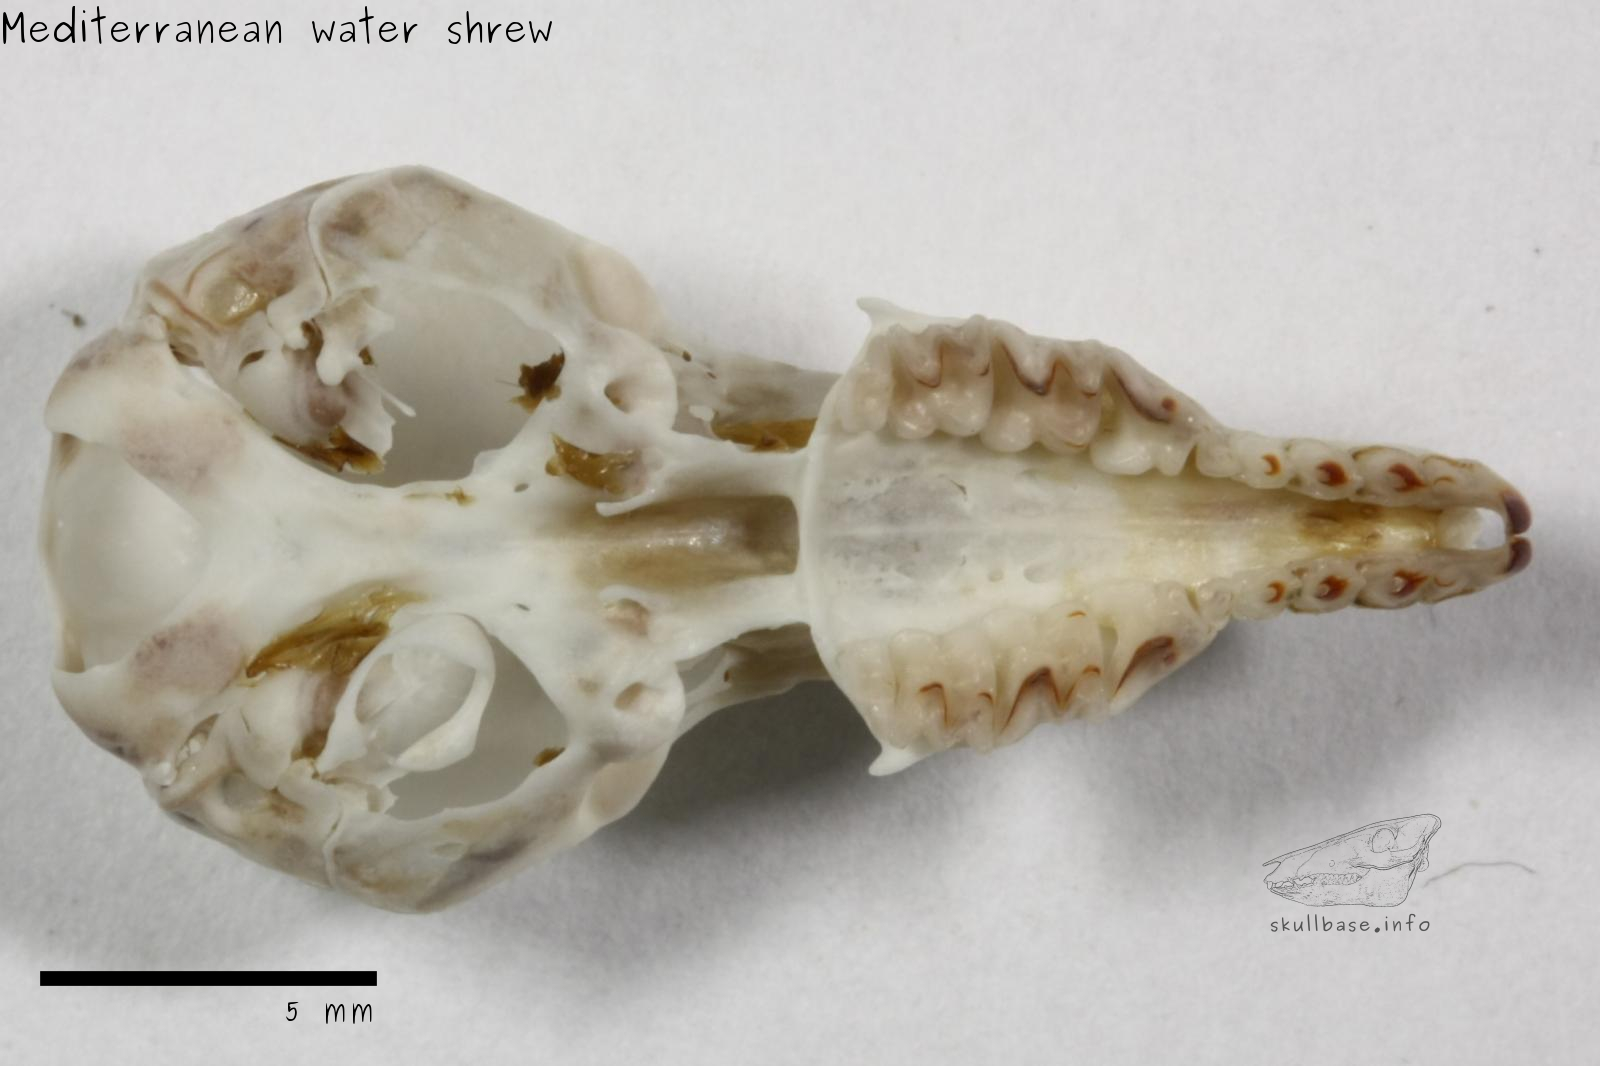 Mediterranean water shrew (Neomys anomalus) skull ventral view